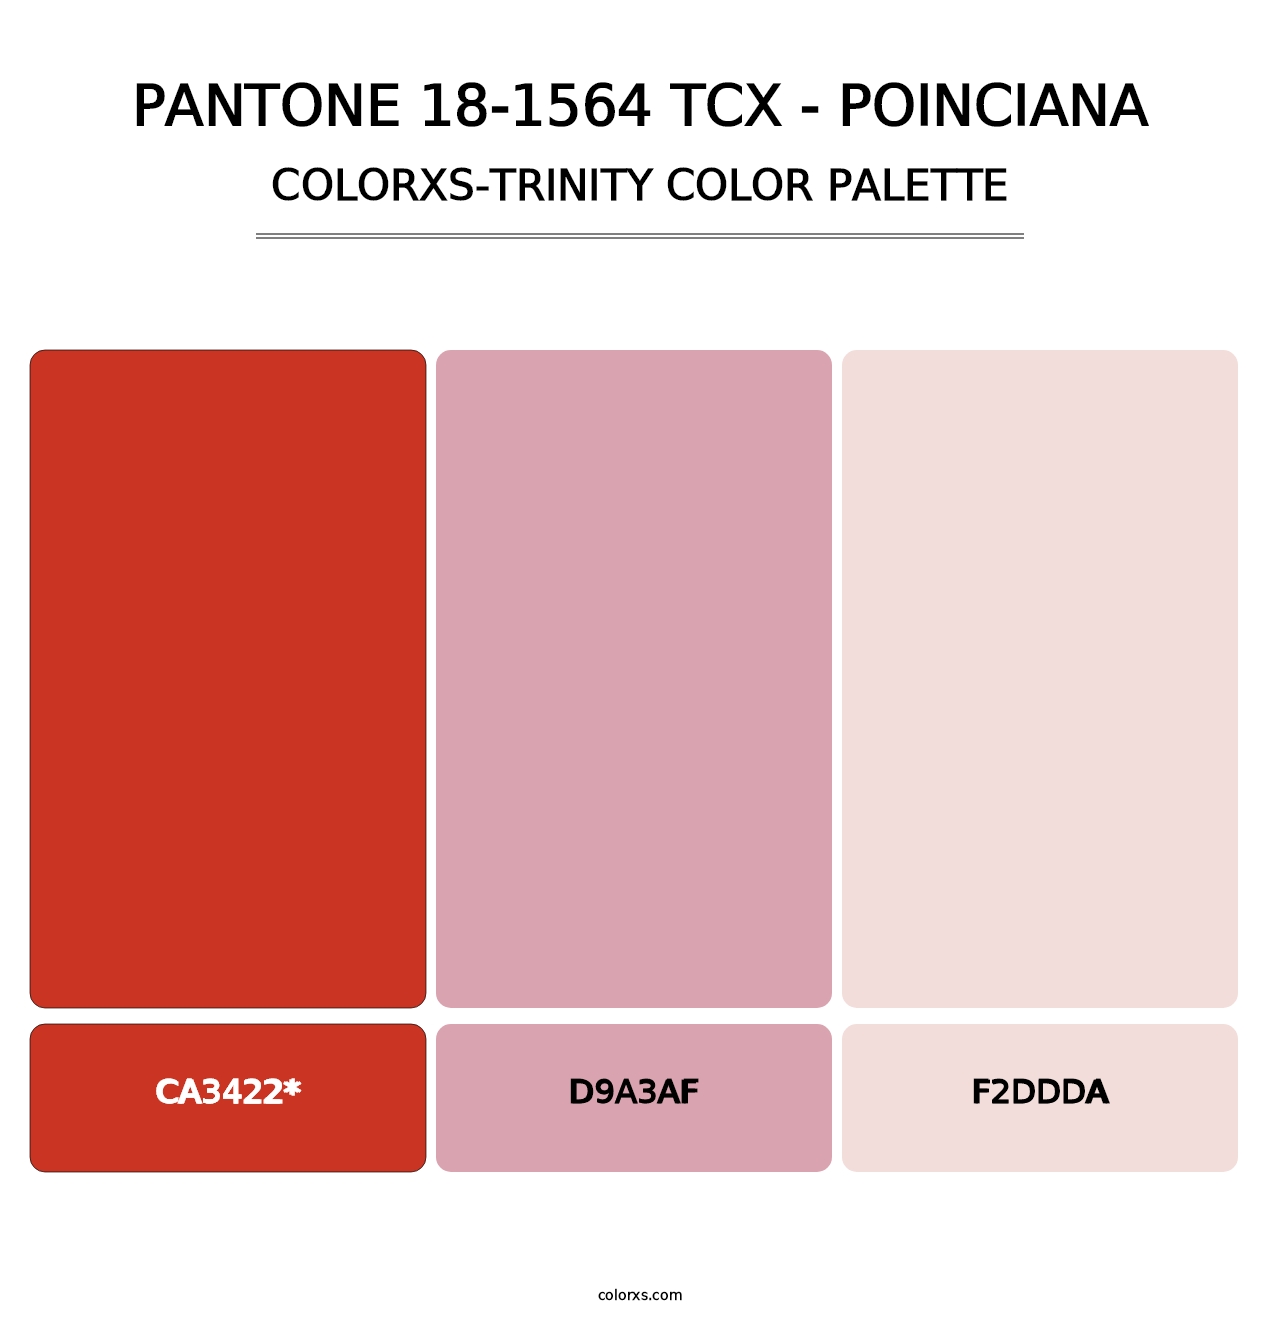 PANTONE 18-1564 TCX - Poinciana - Colorxs Trinity Palette